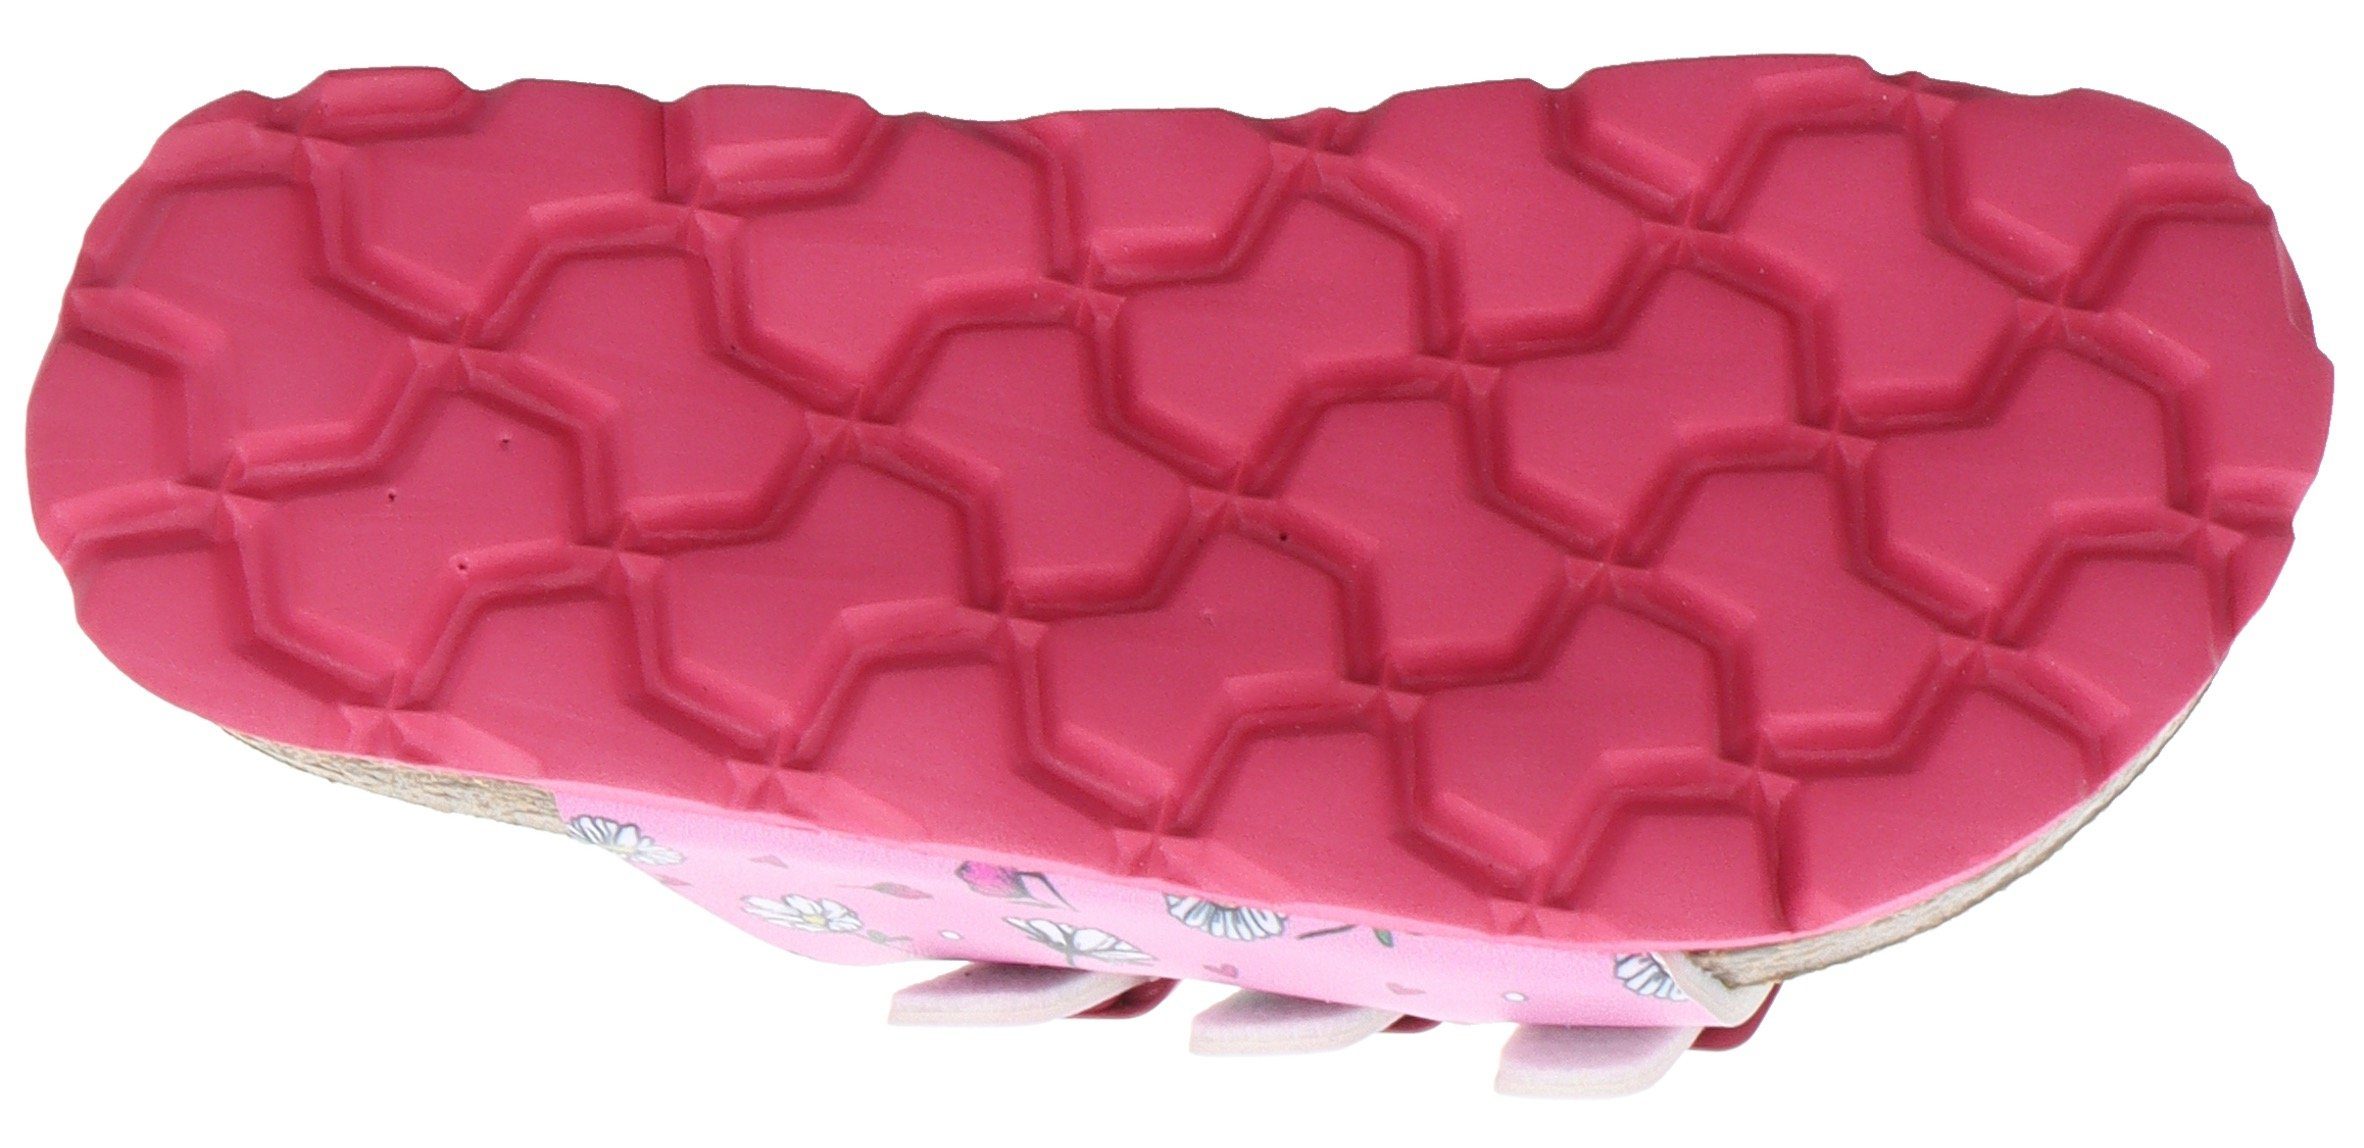 allover rosa-pink mit Mittel WMS: Superfit Fußbettpantolette Hausschuh Print